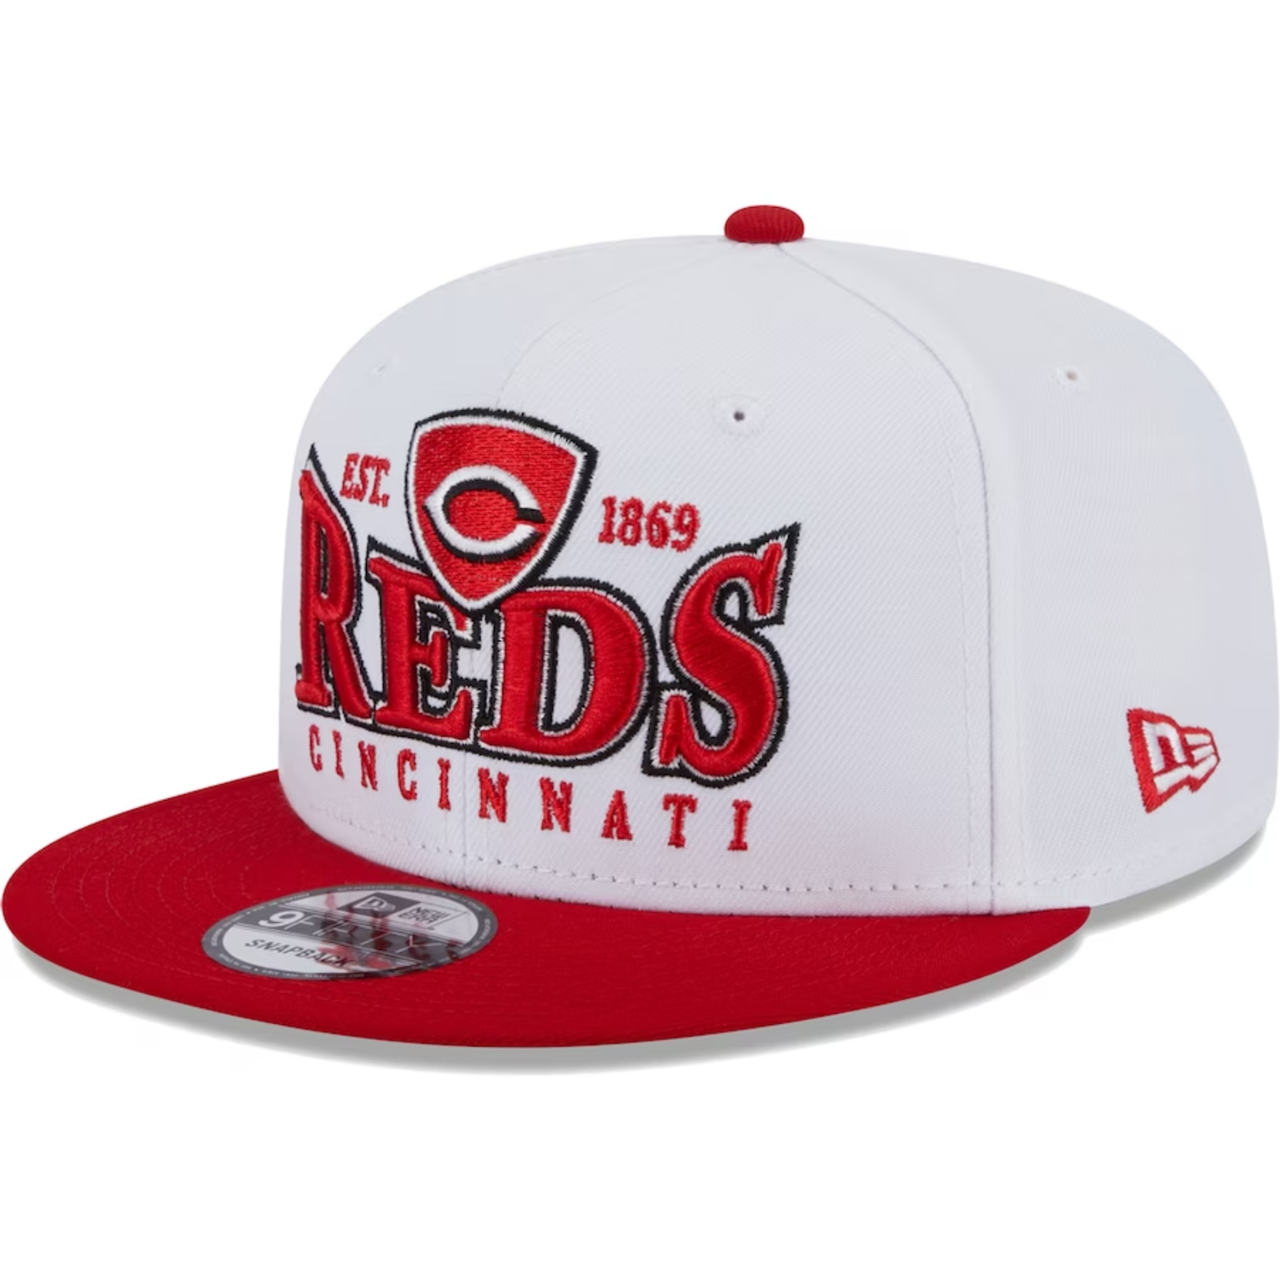 Officially Licensed MLB Men's New Era 150th Anniversary Hat